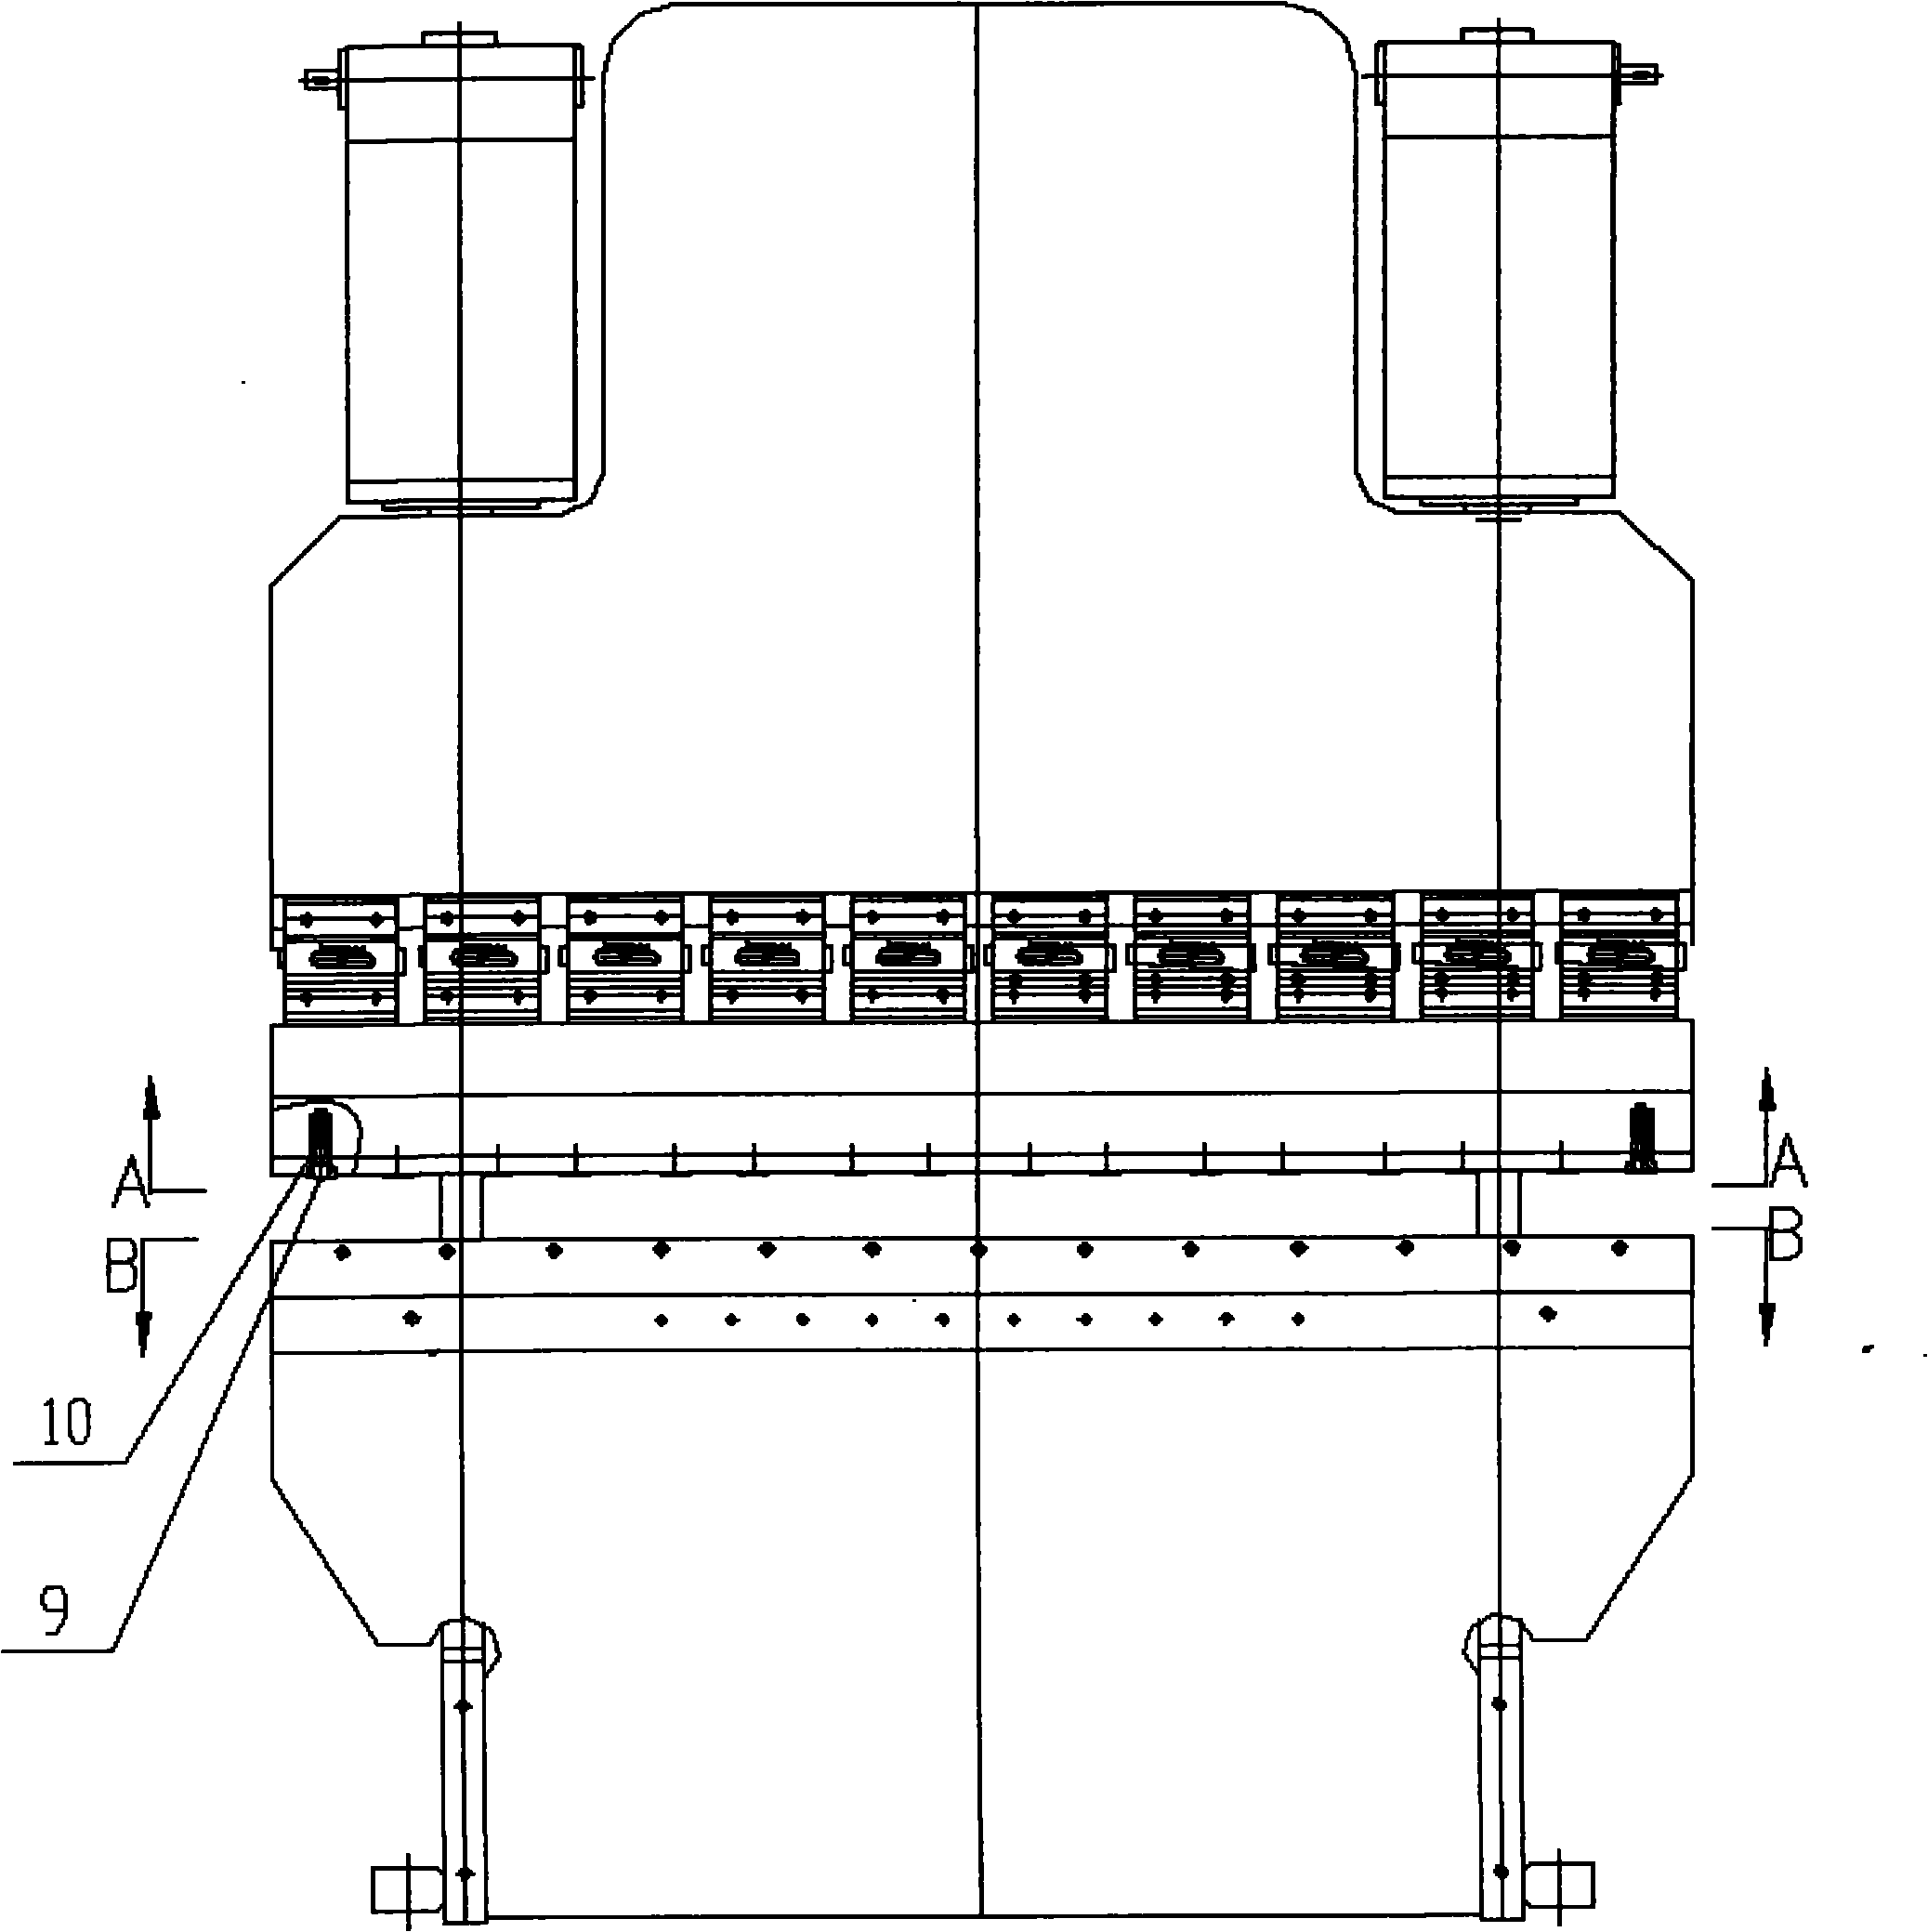 Multifunctional numerical control bending machine for molding irregular plates